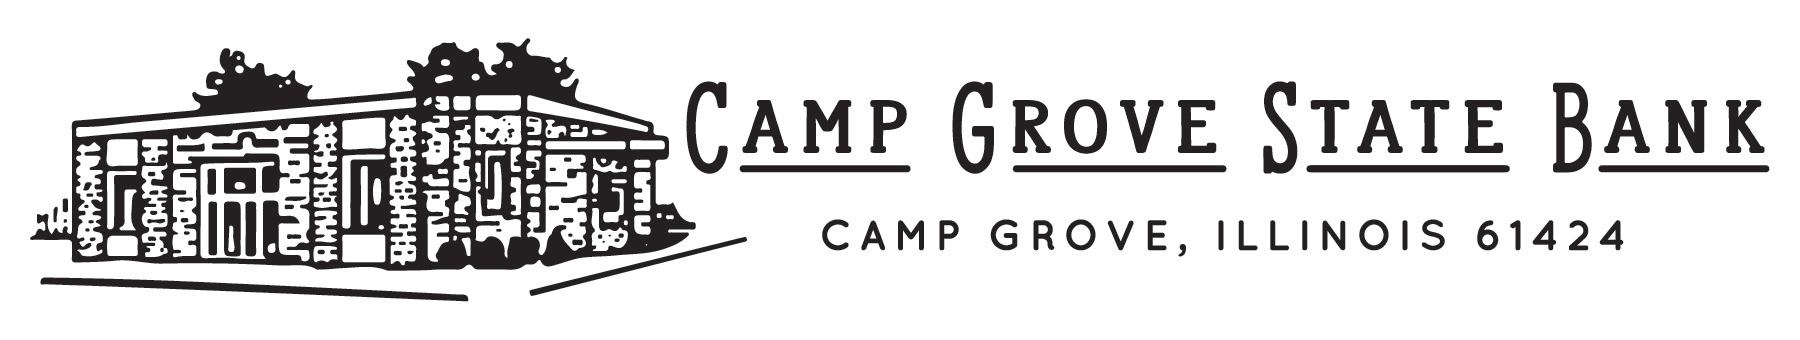 Camp Grove State Bank Logo Banner